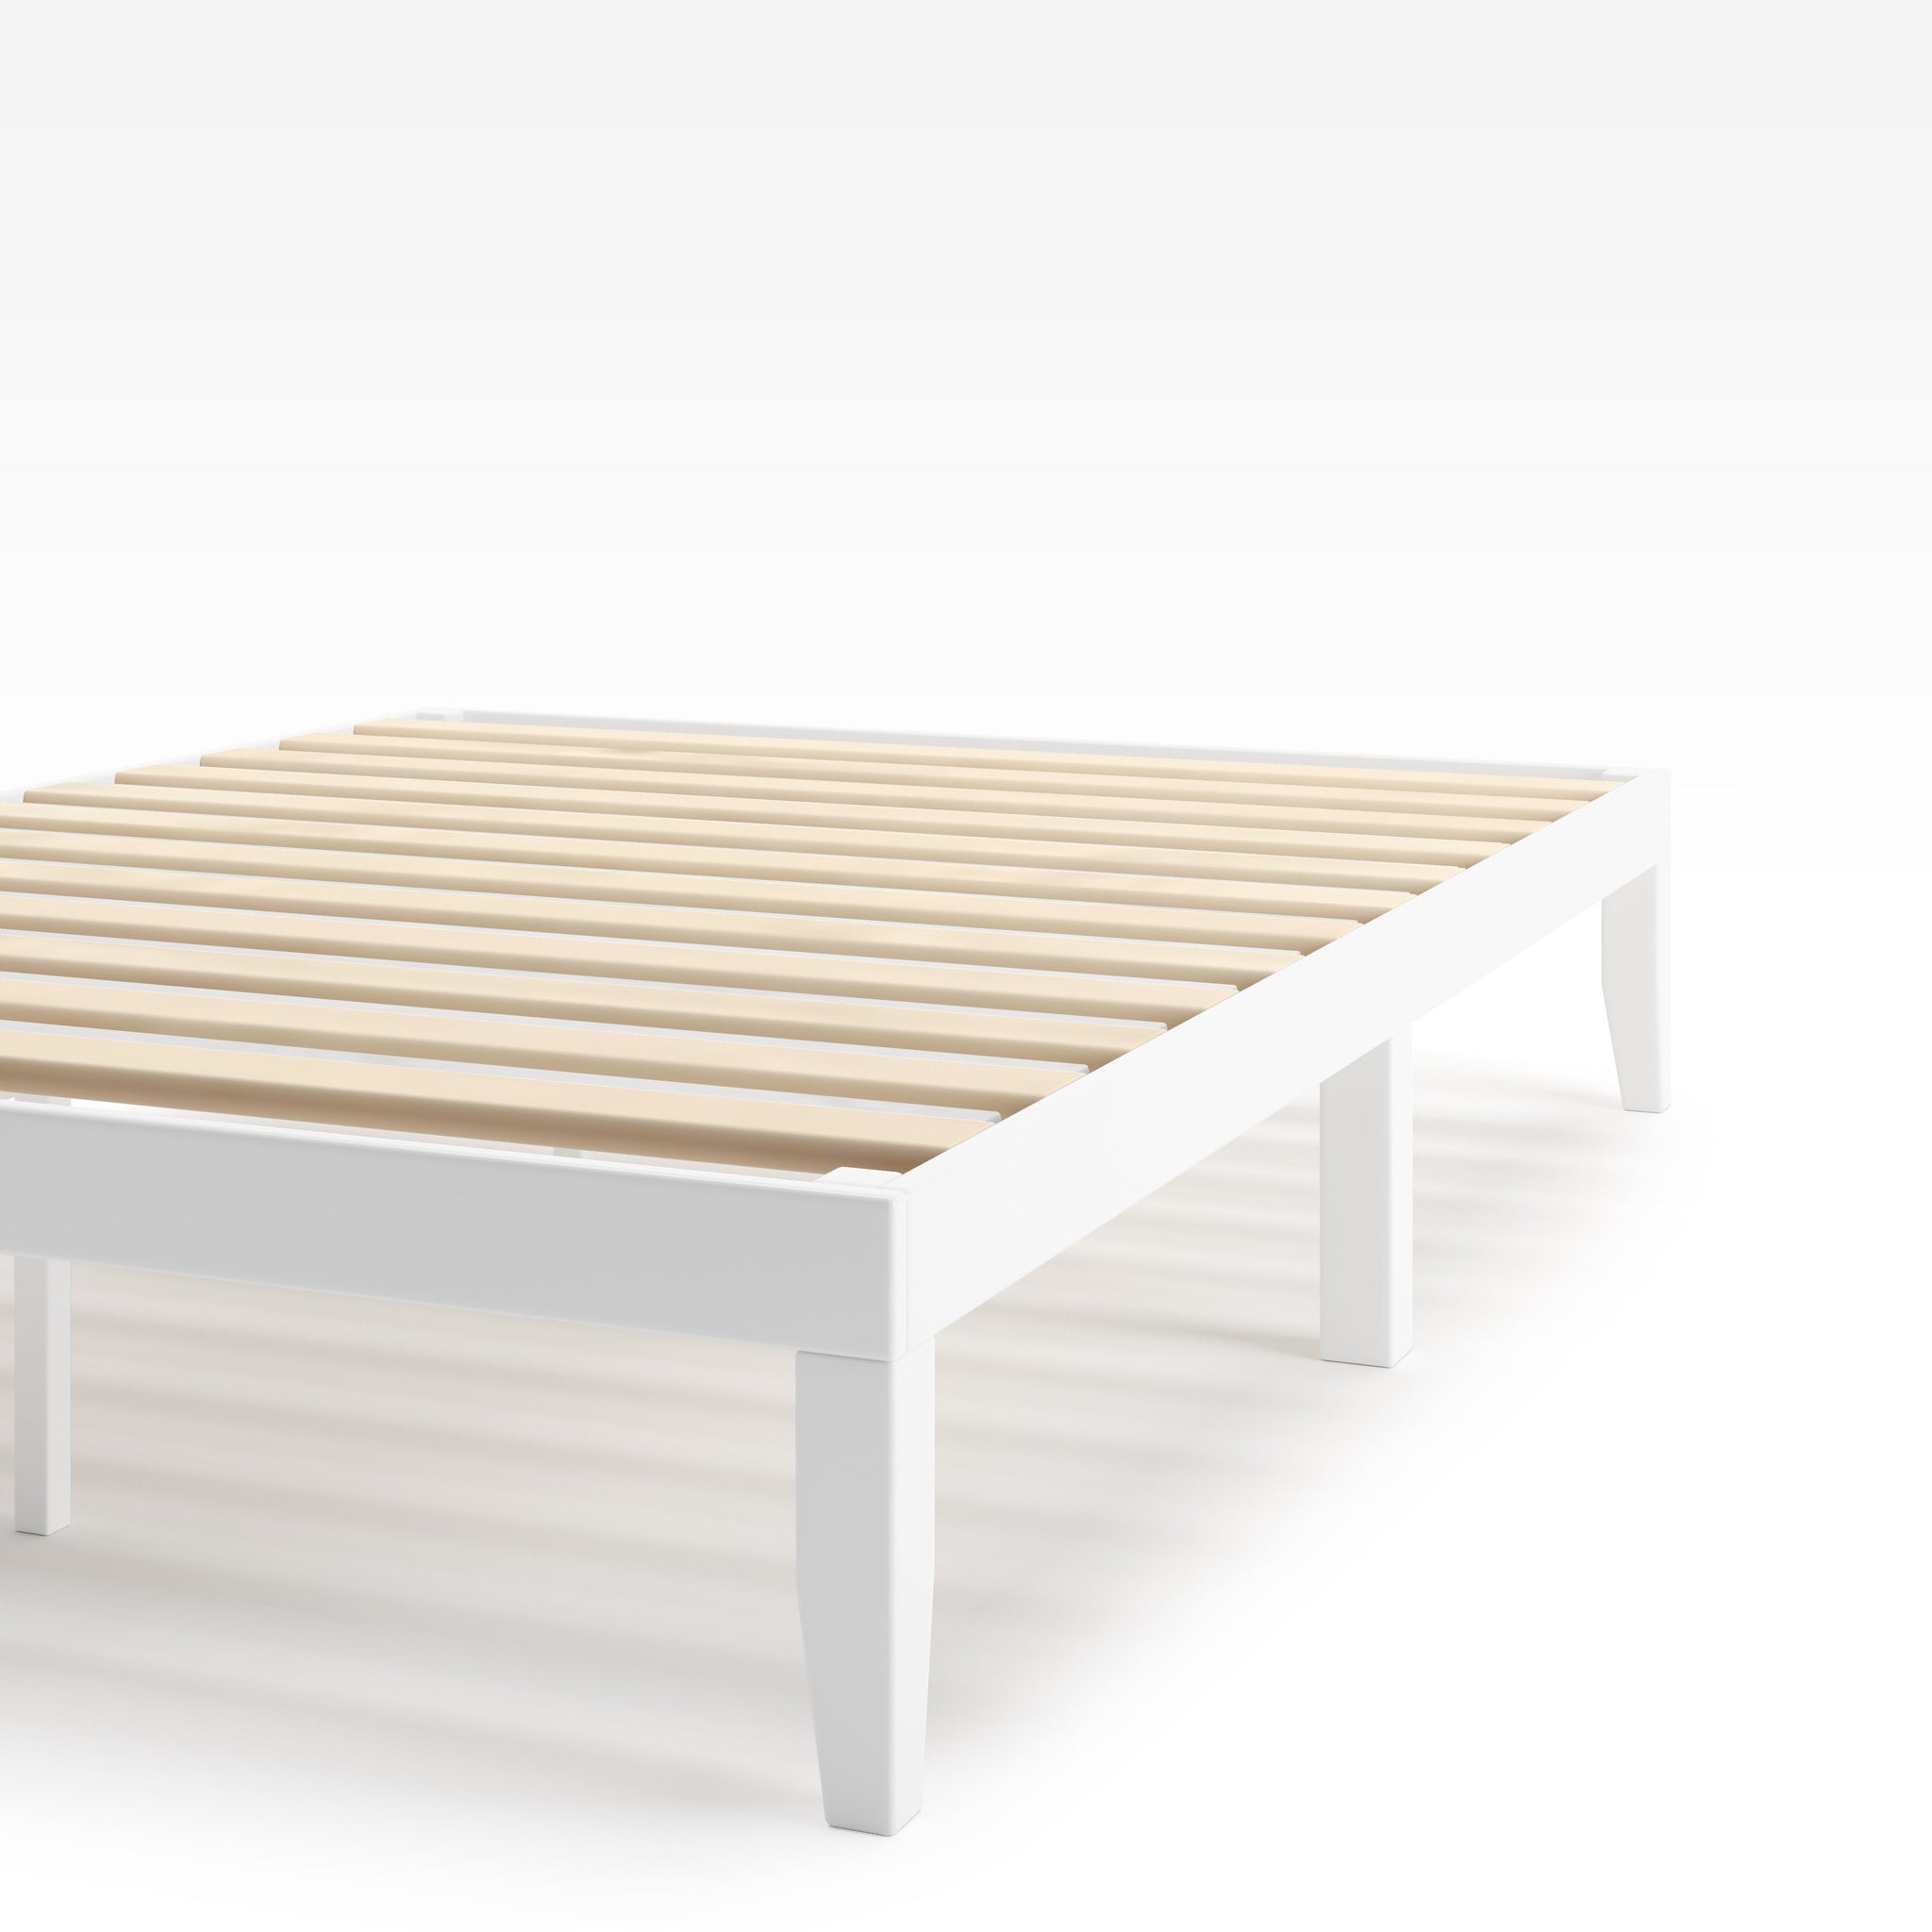 Moiz wood platform bed frame White